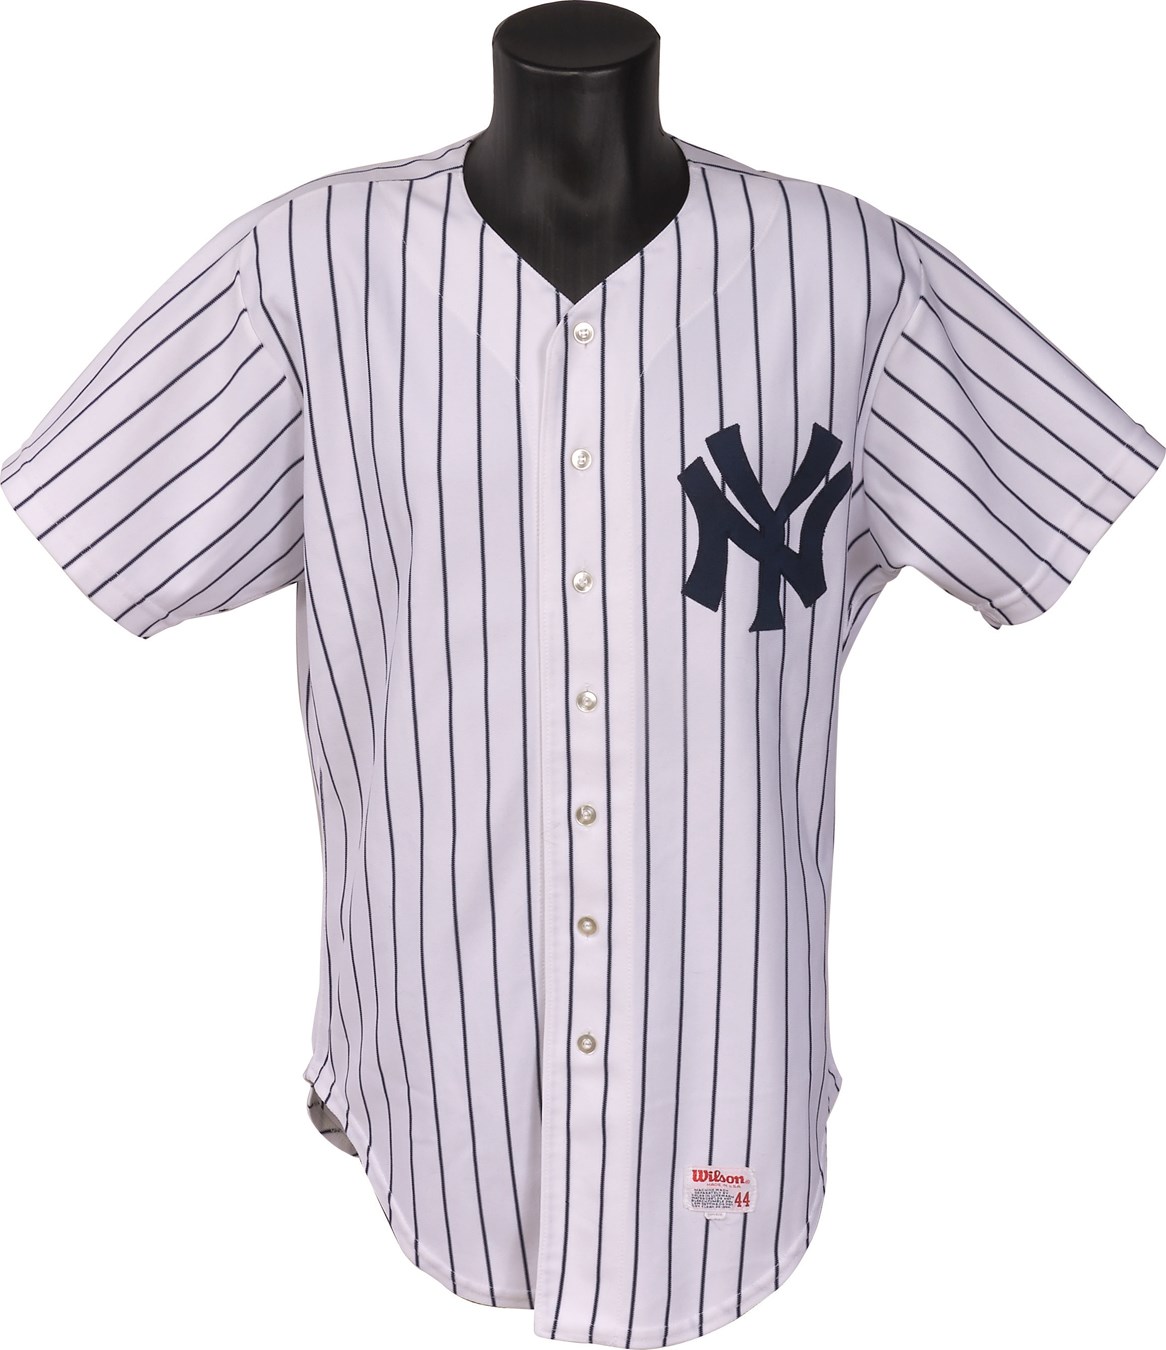 - 1984 Phil Niekro New York Yankees Game Worn Jersey (Photomatched)